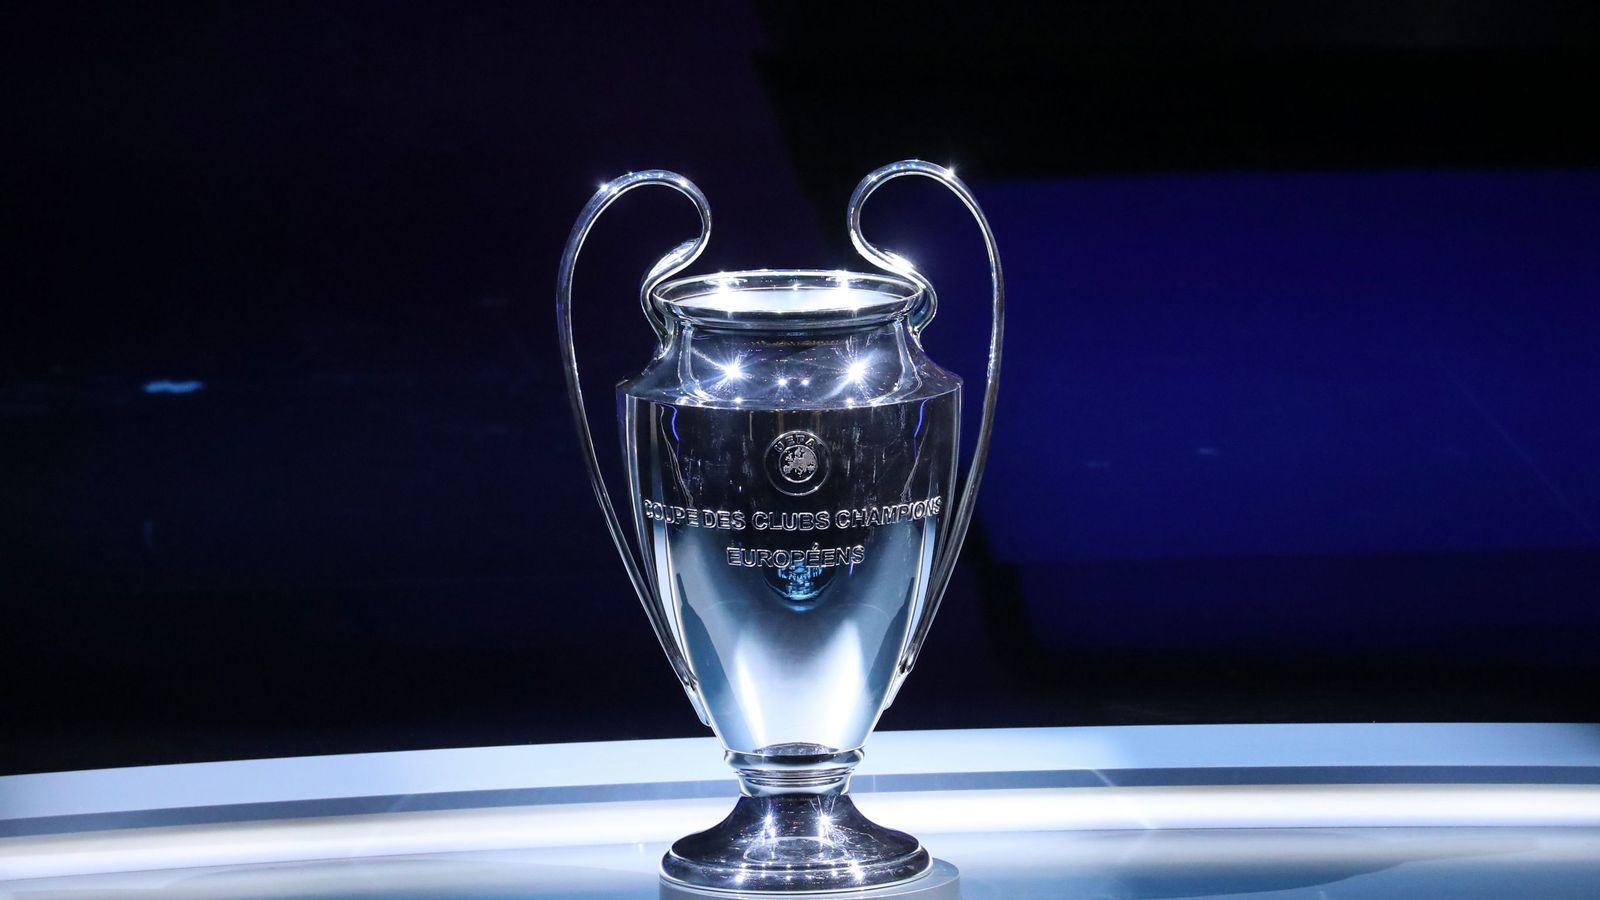 Lisbon to host the Champions League mini-tournament